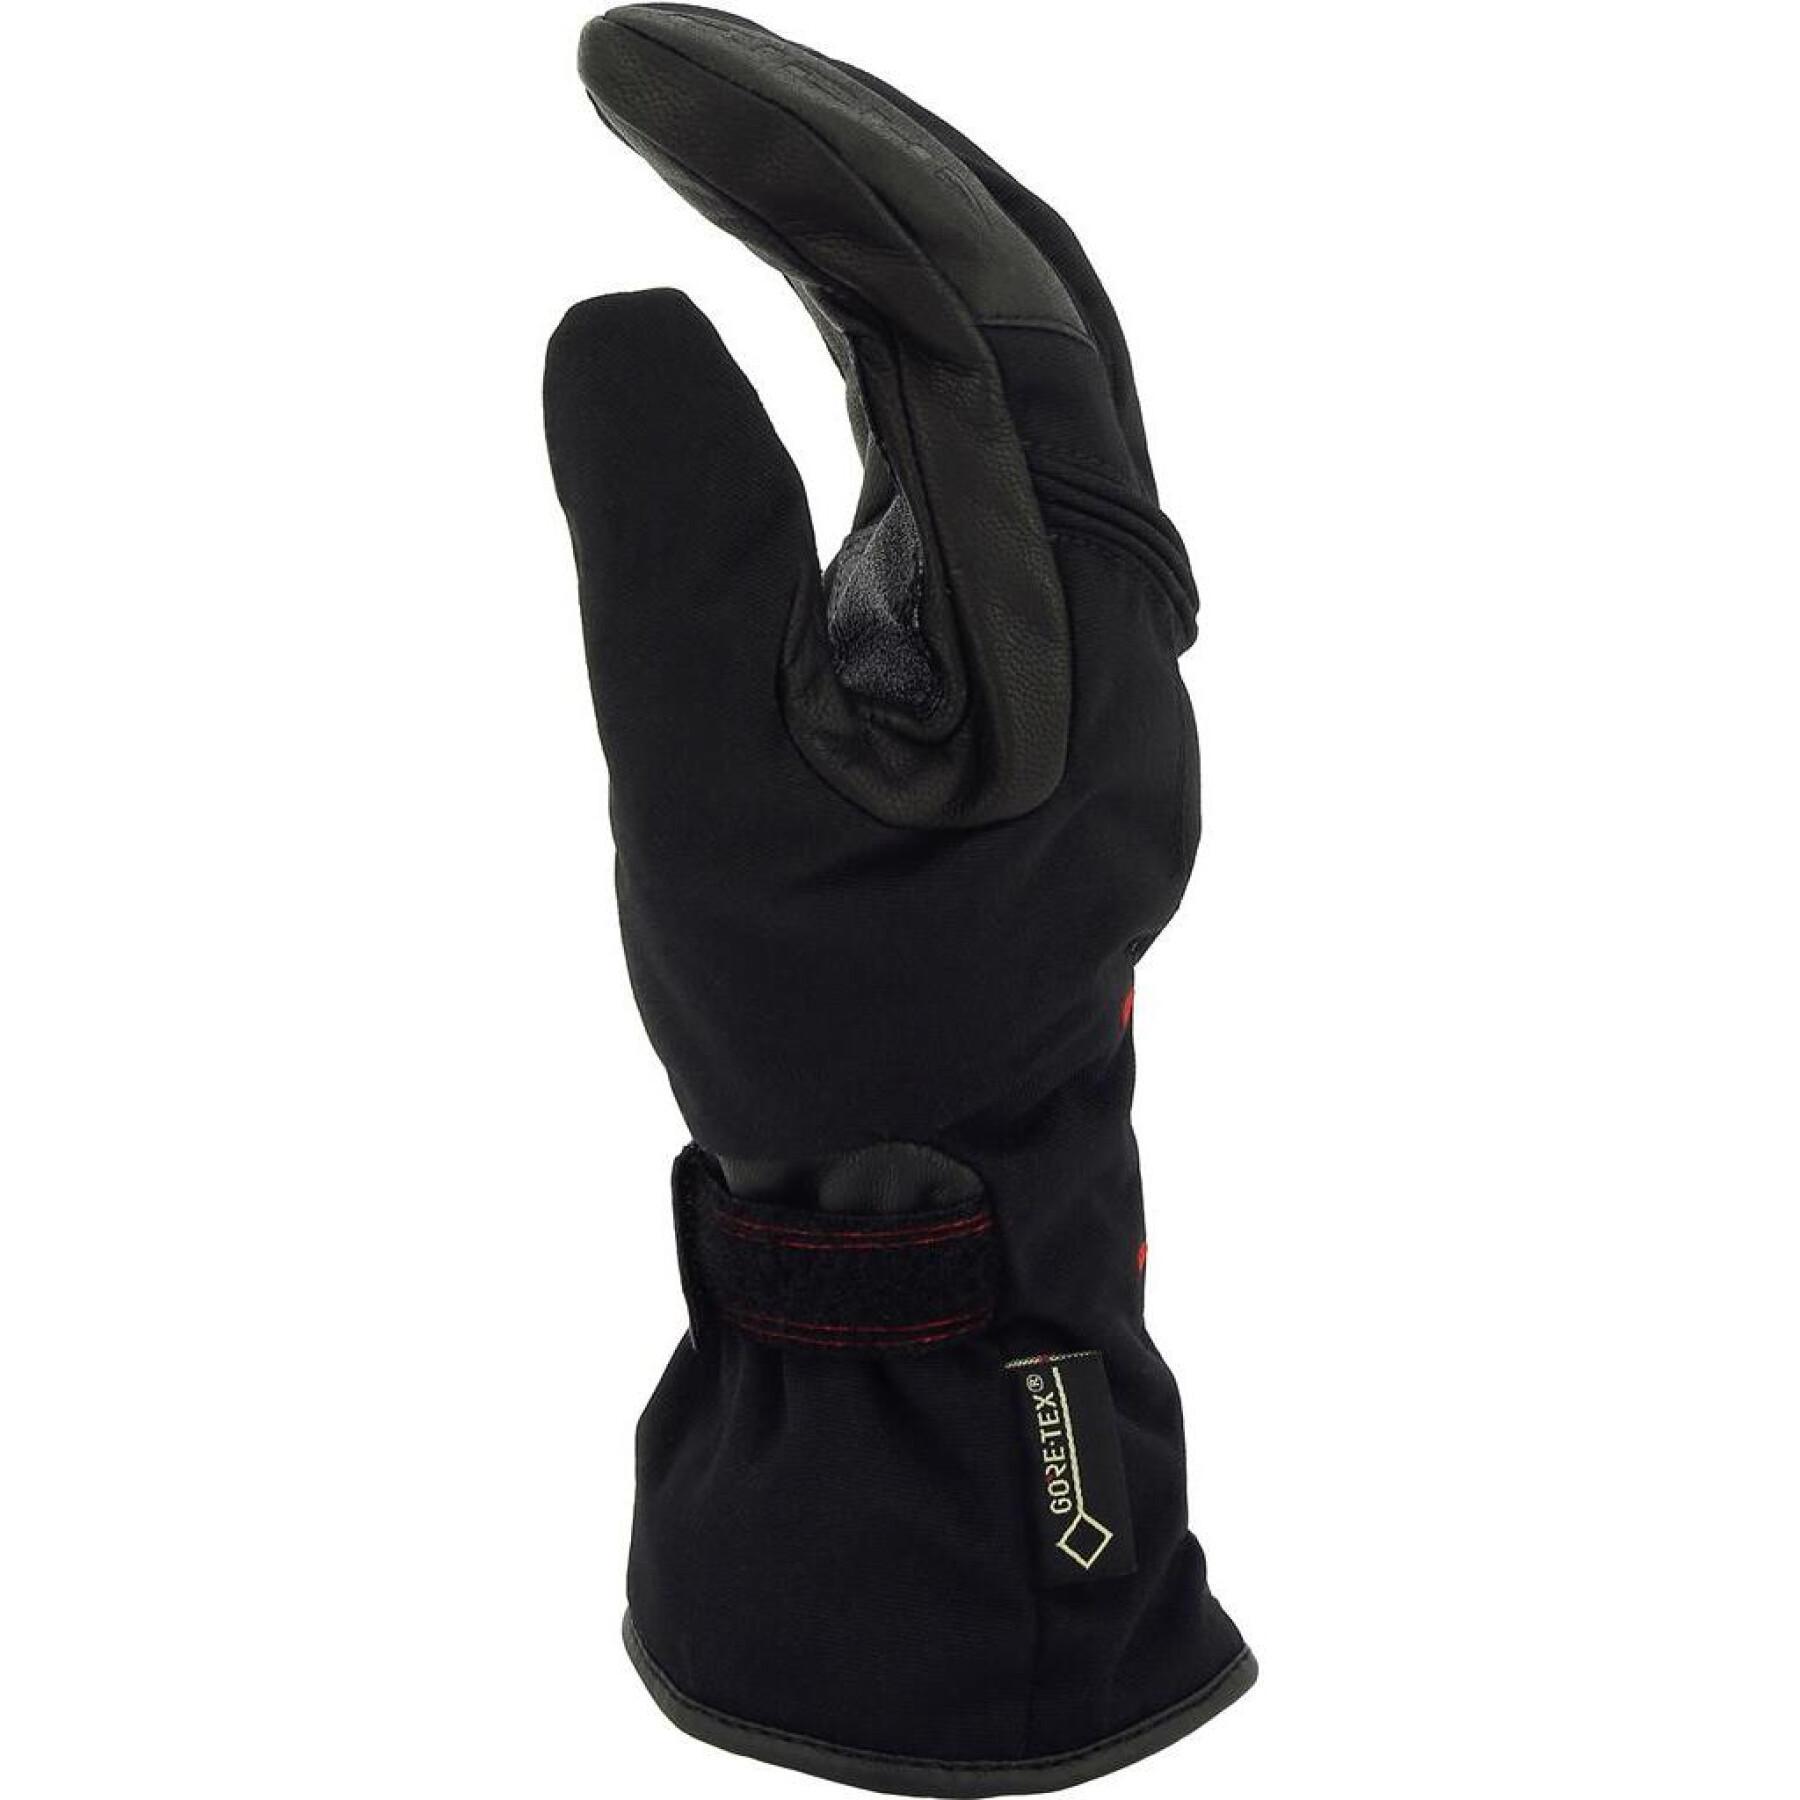 Richa Buster Gore-Tex mid-season motorcycle gloves